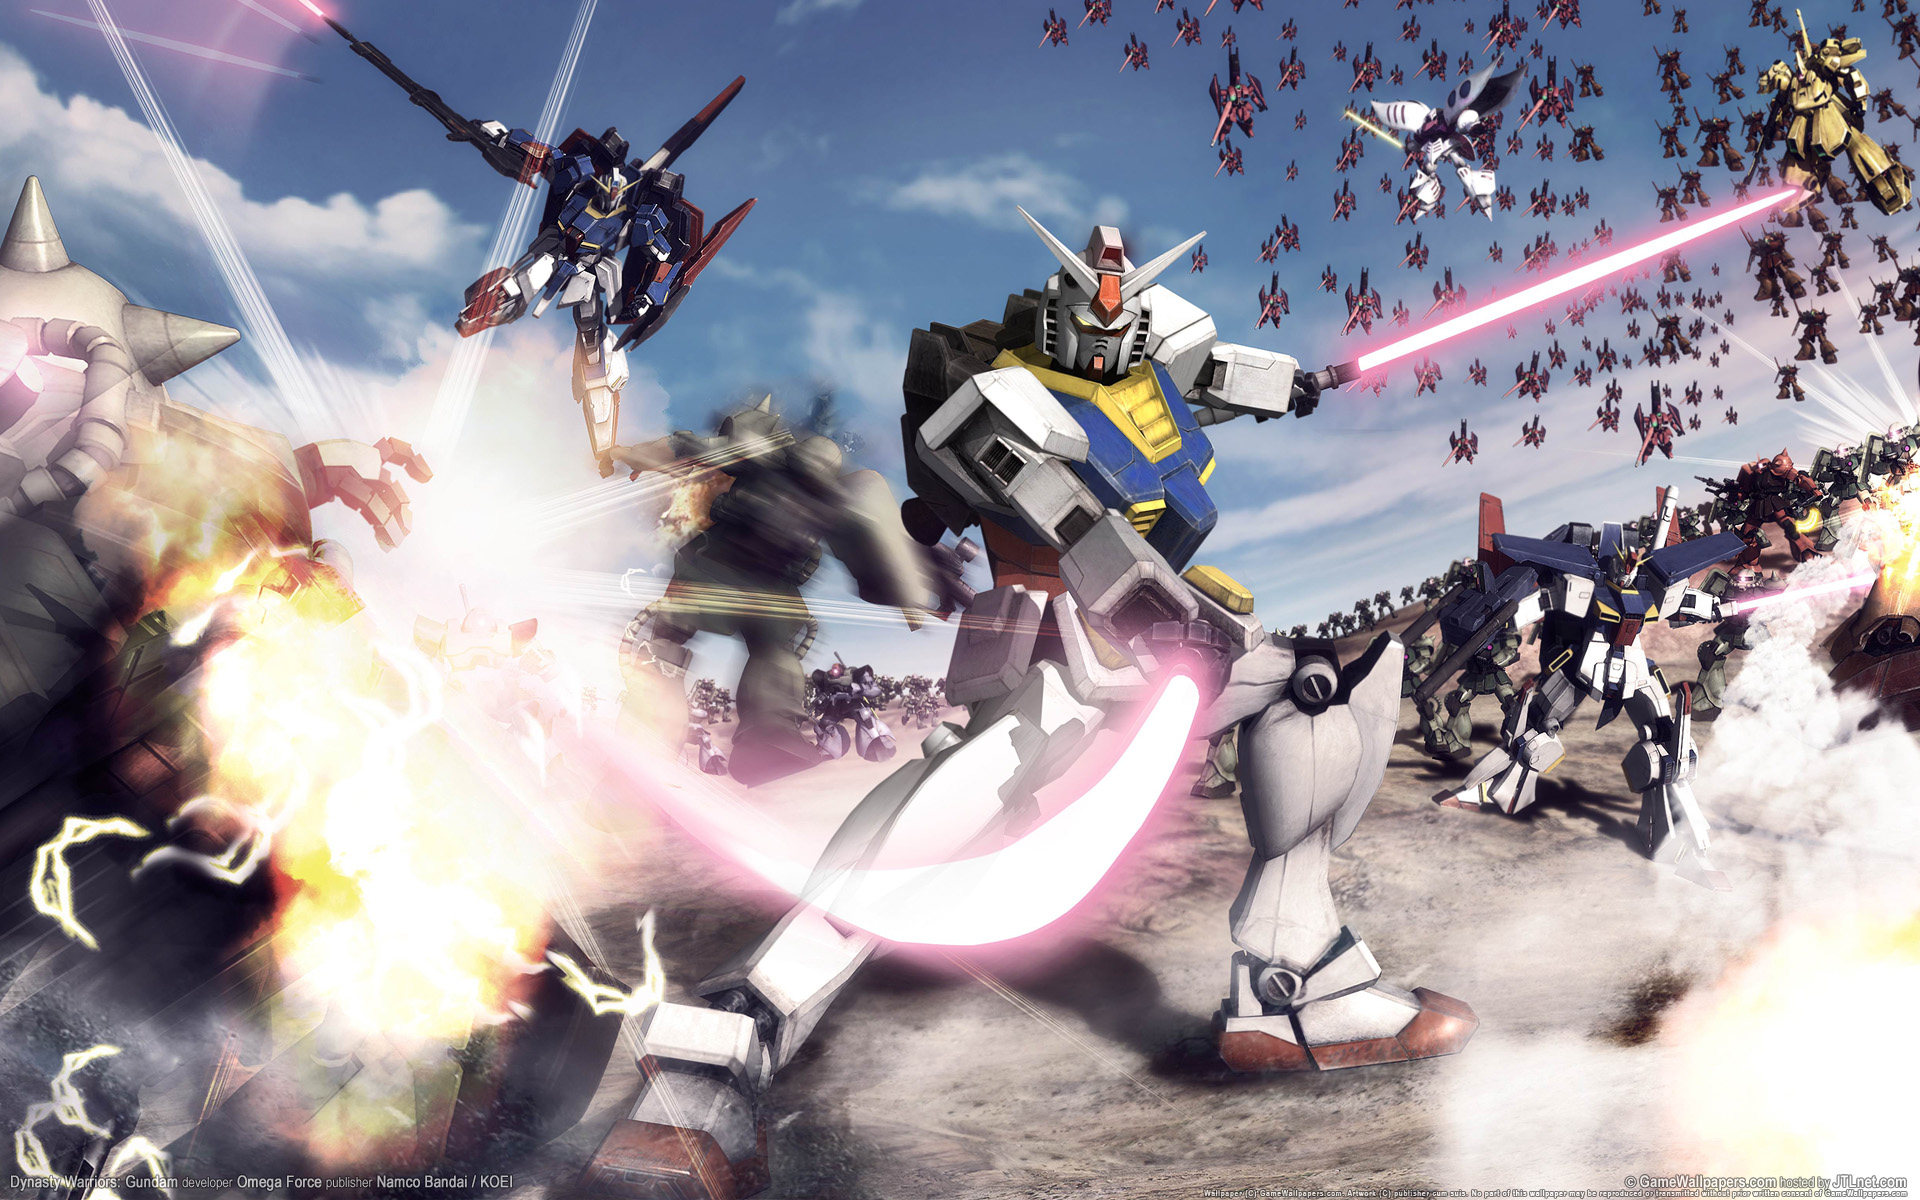 Gundam Wallpaper 1080p